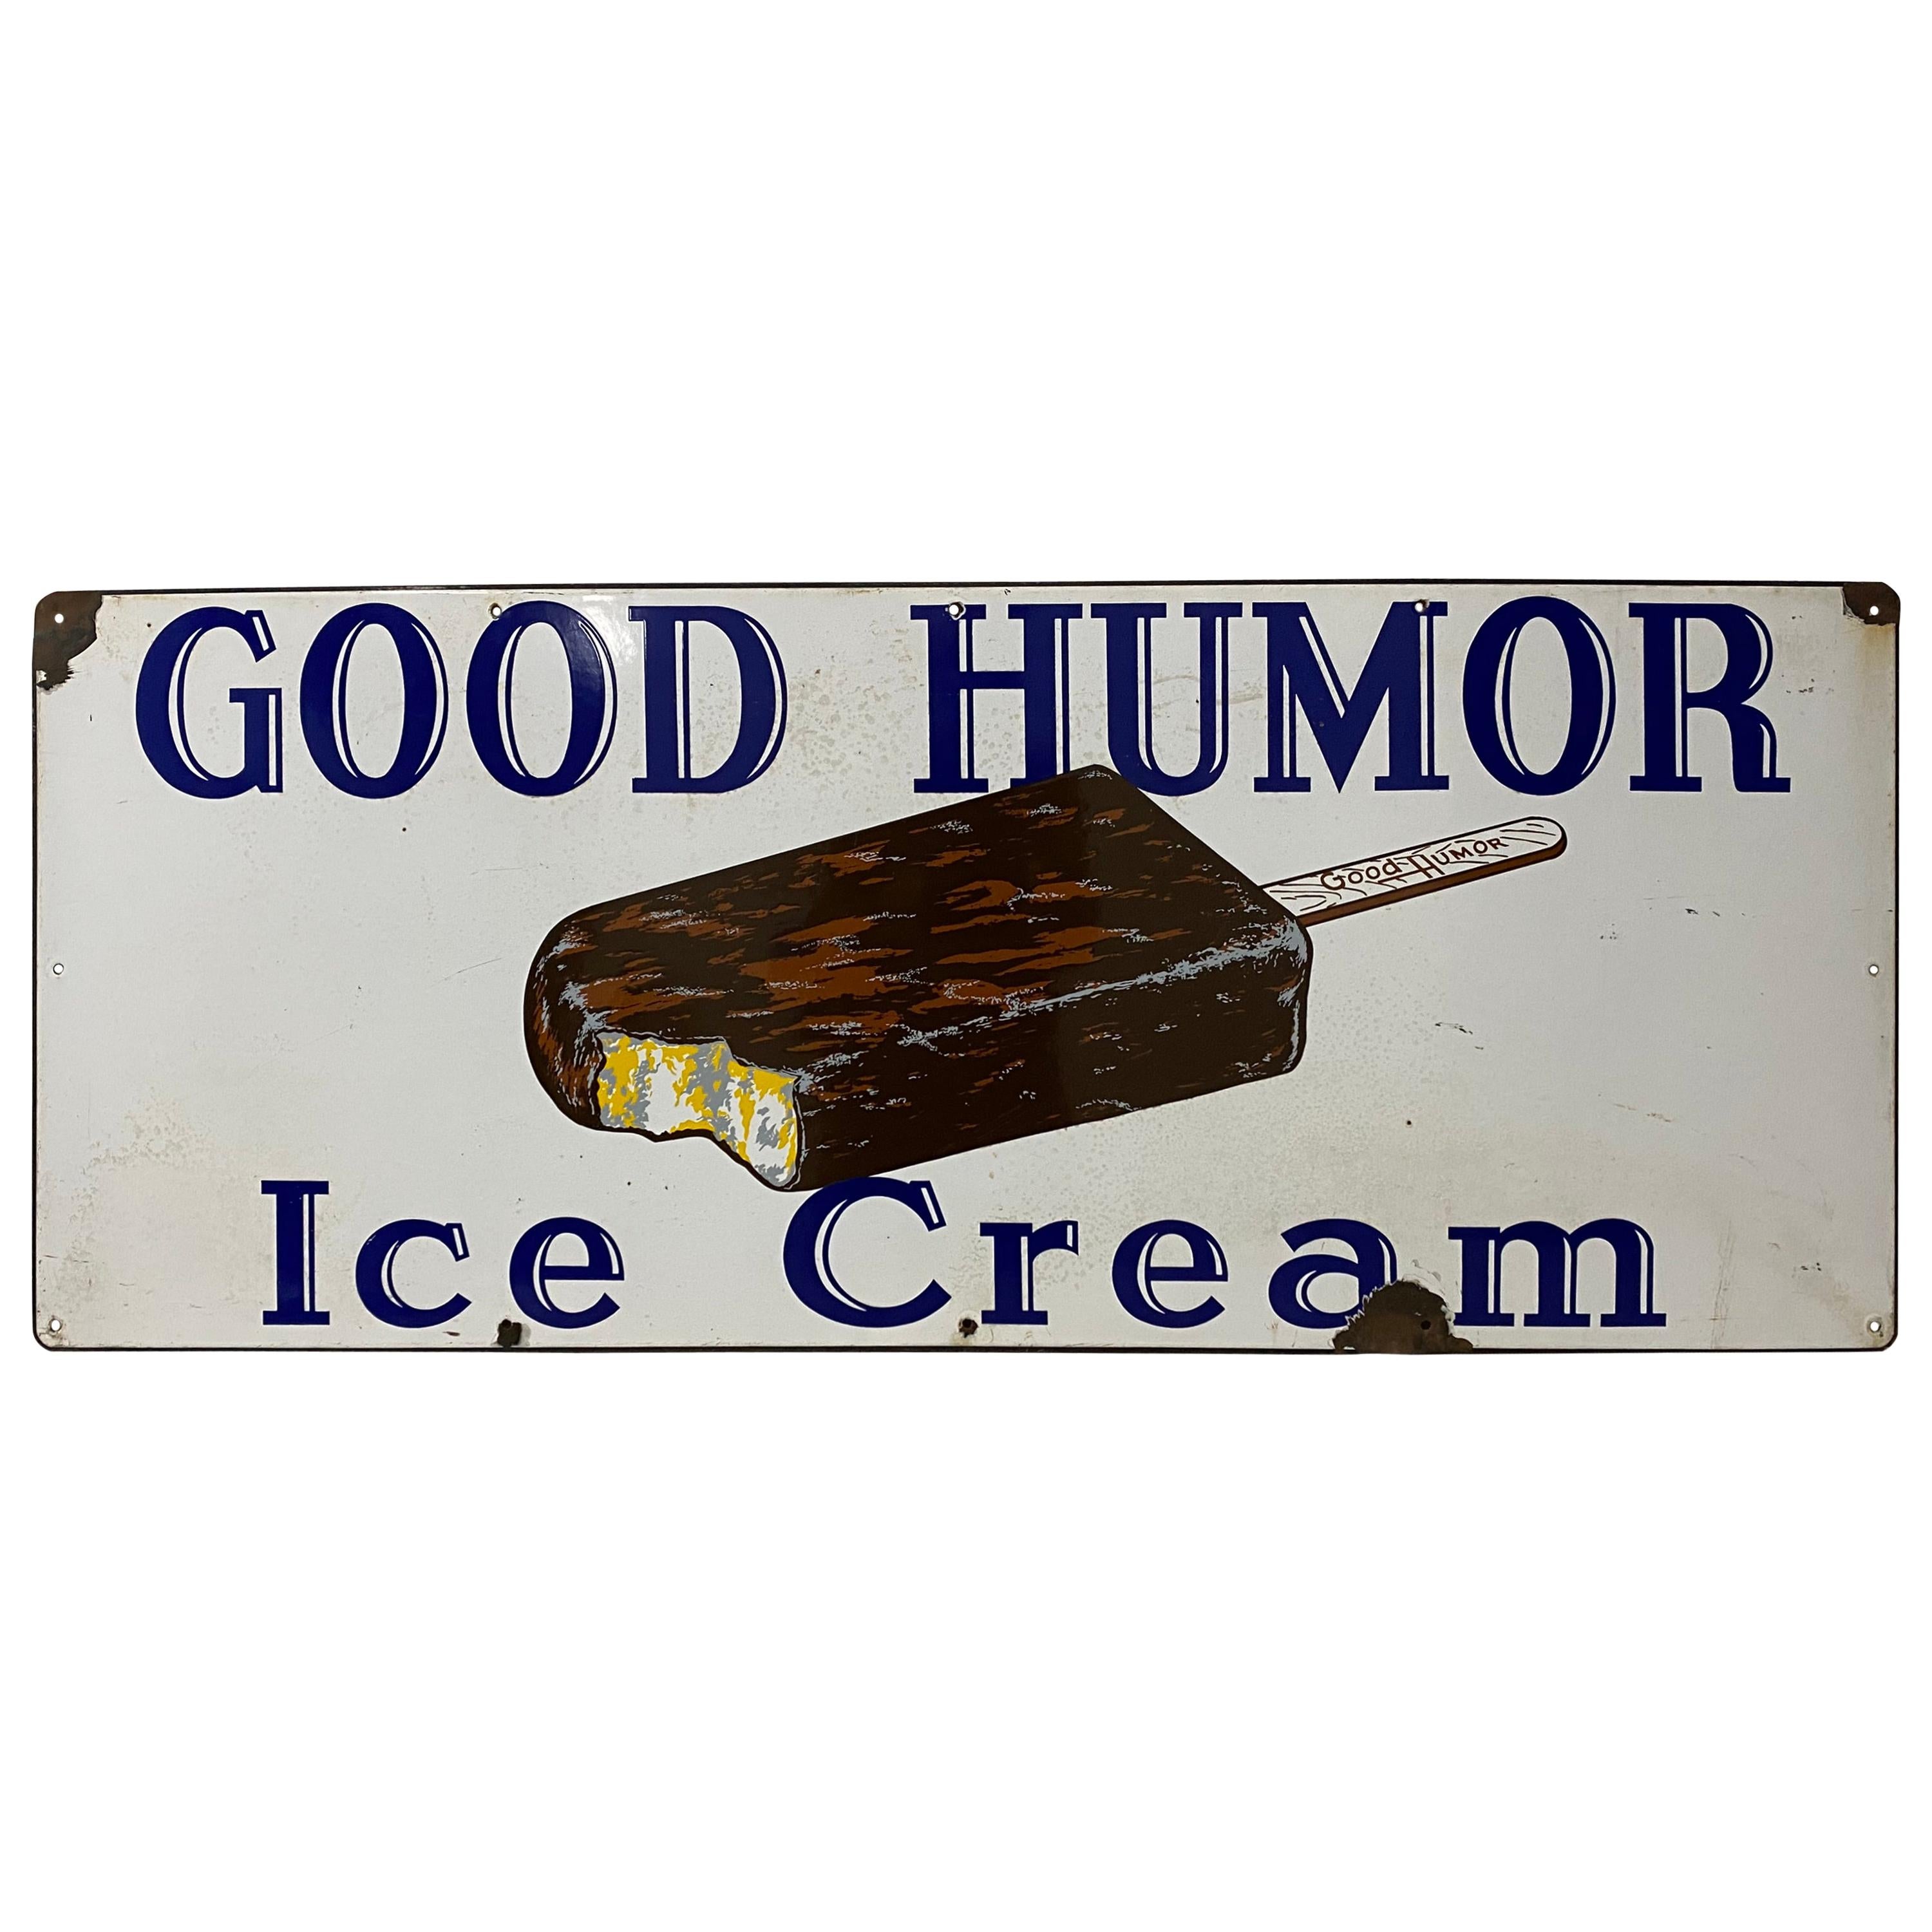 Vintage "Good Humor Ice Cream" Enameled Advertising Sign, circa 1930